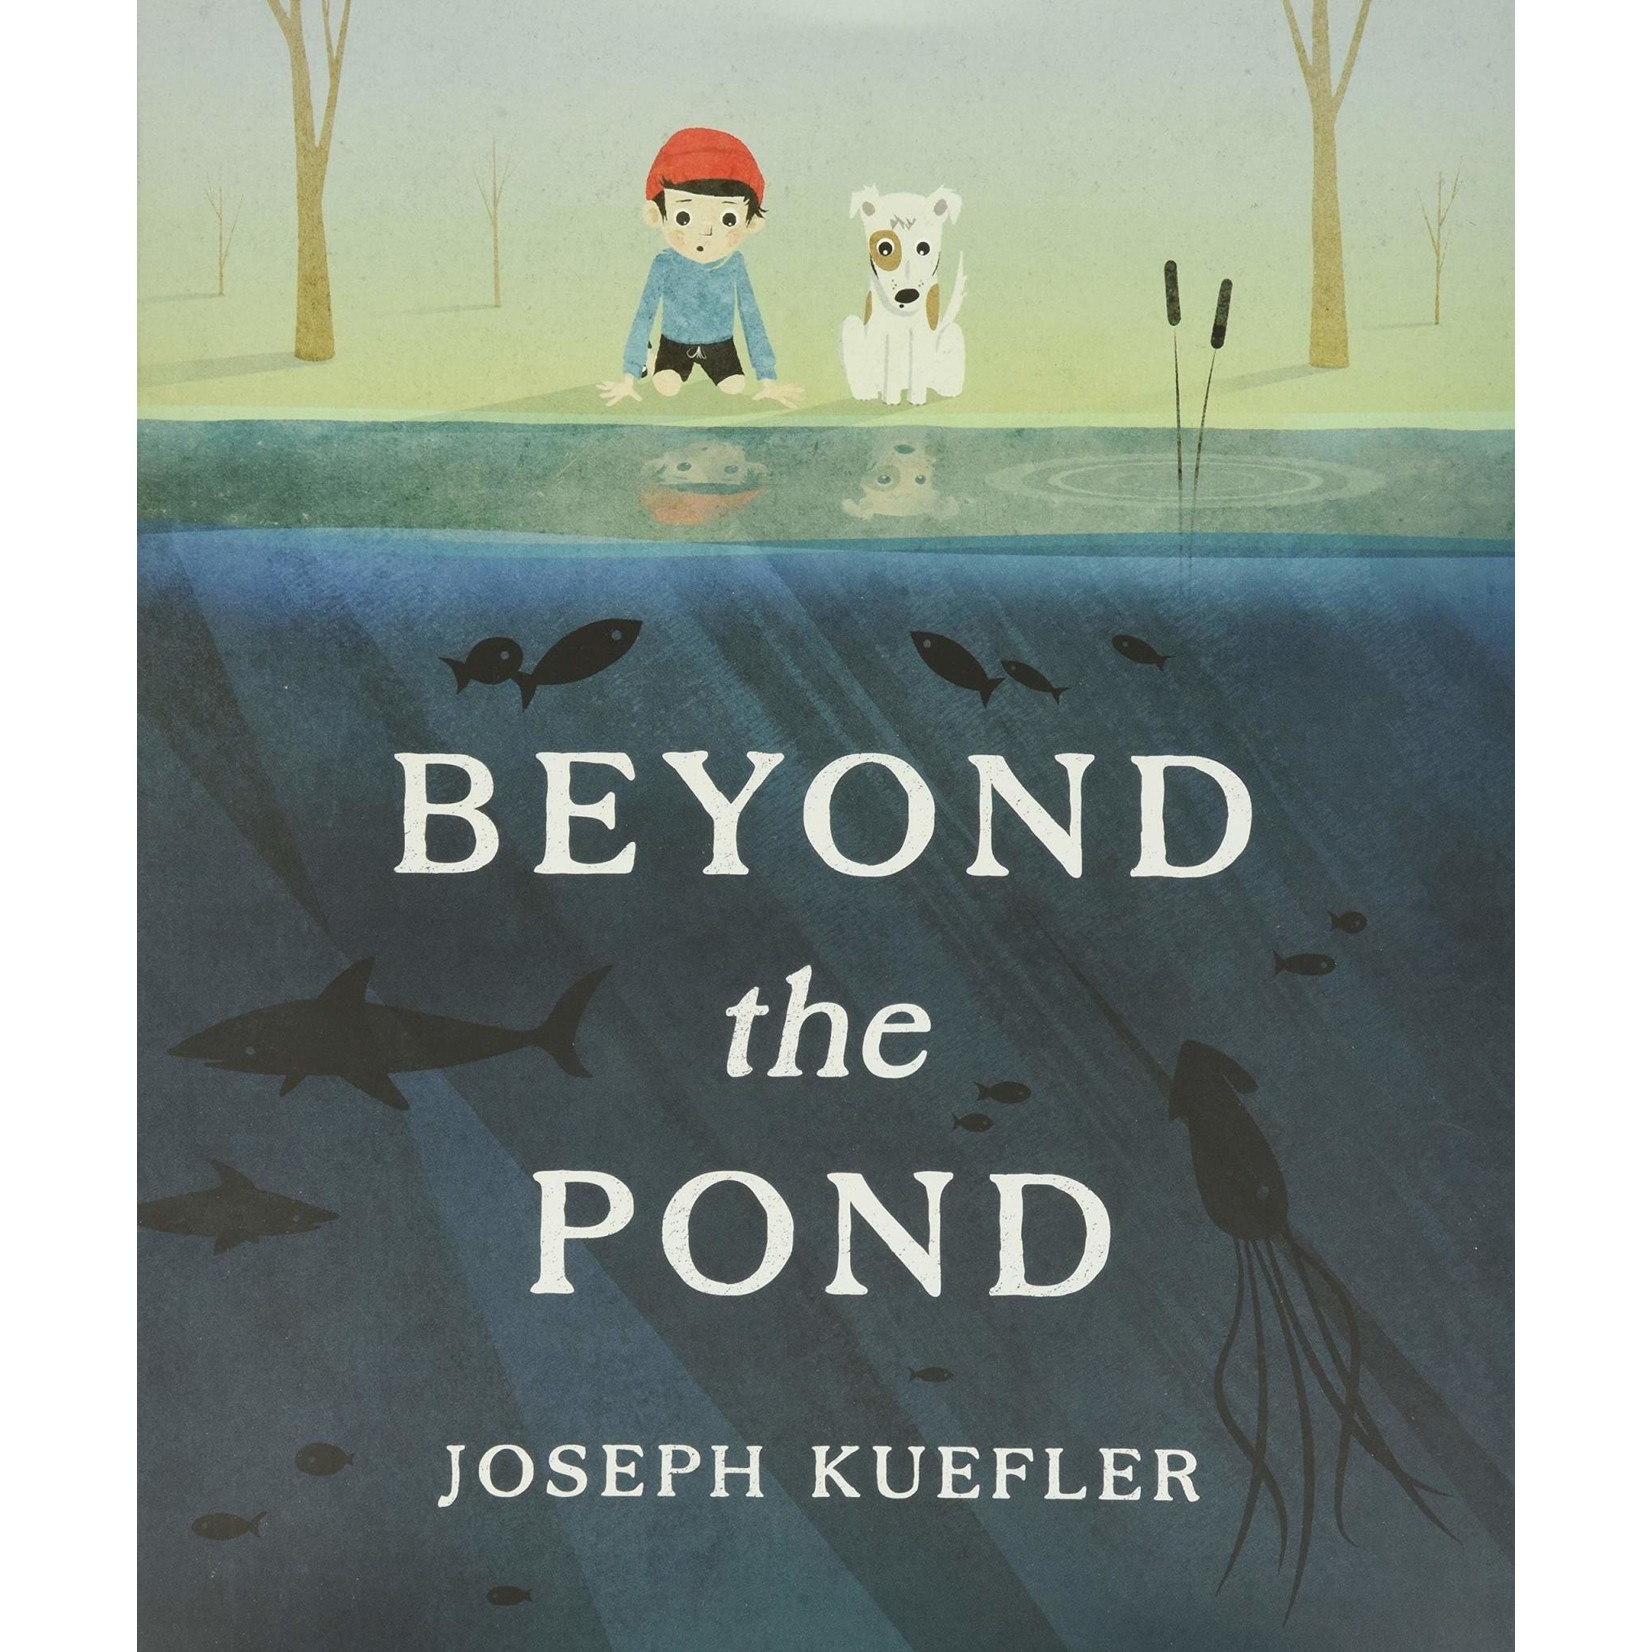 Beyond the Pond by Joseph Kuefler (Hardcover)